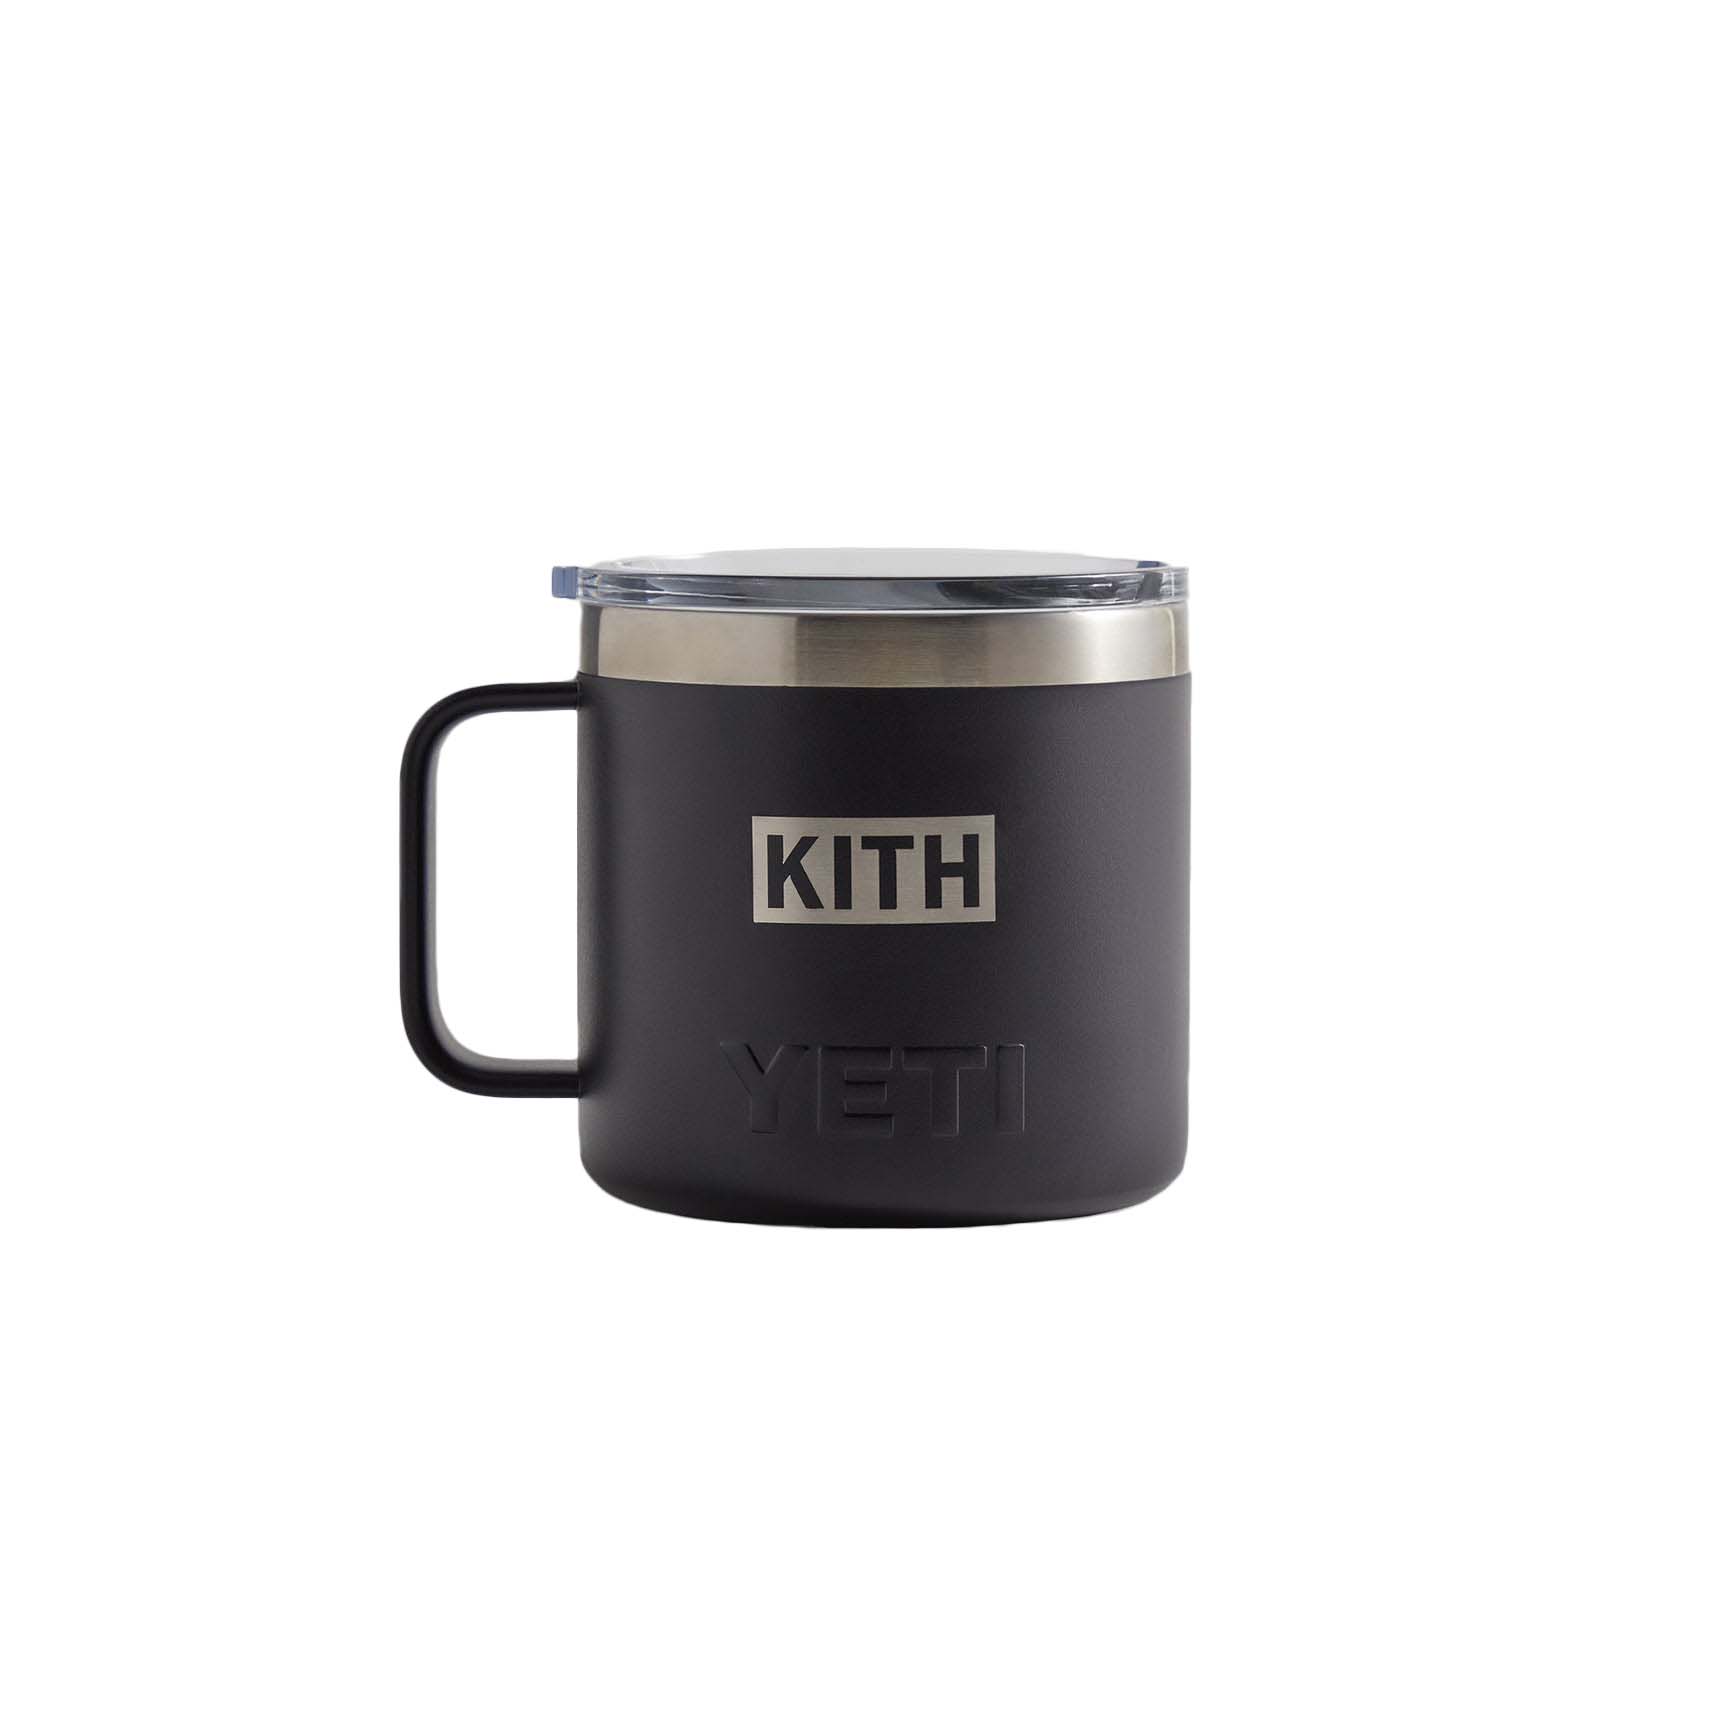 Kith for Yeti Mug Black